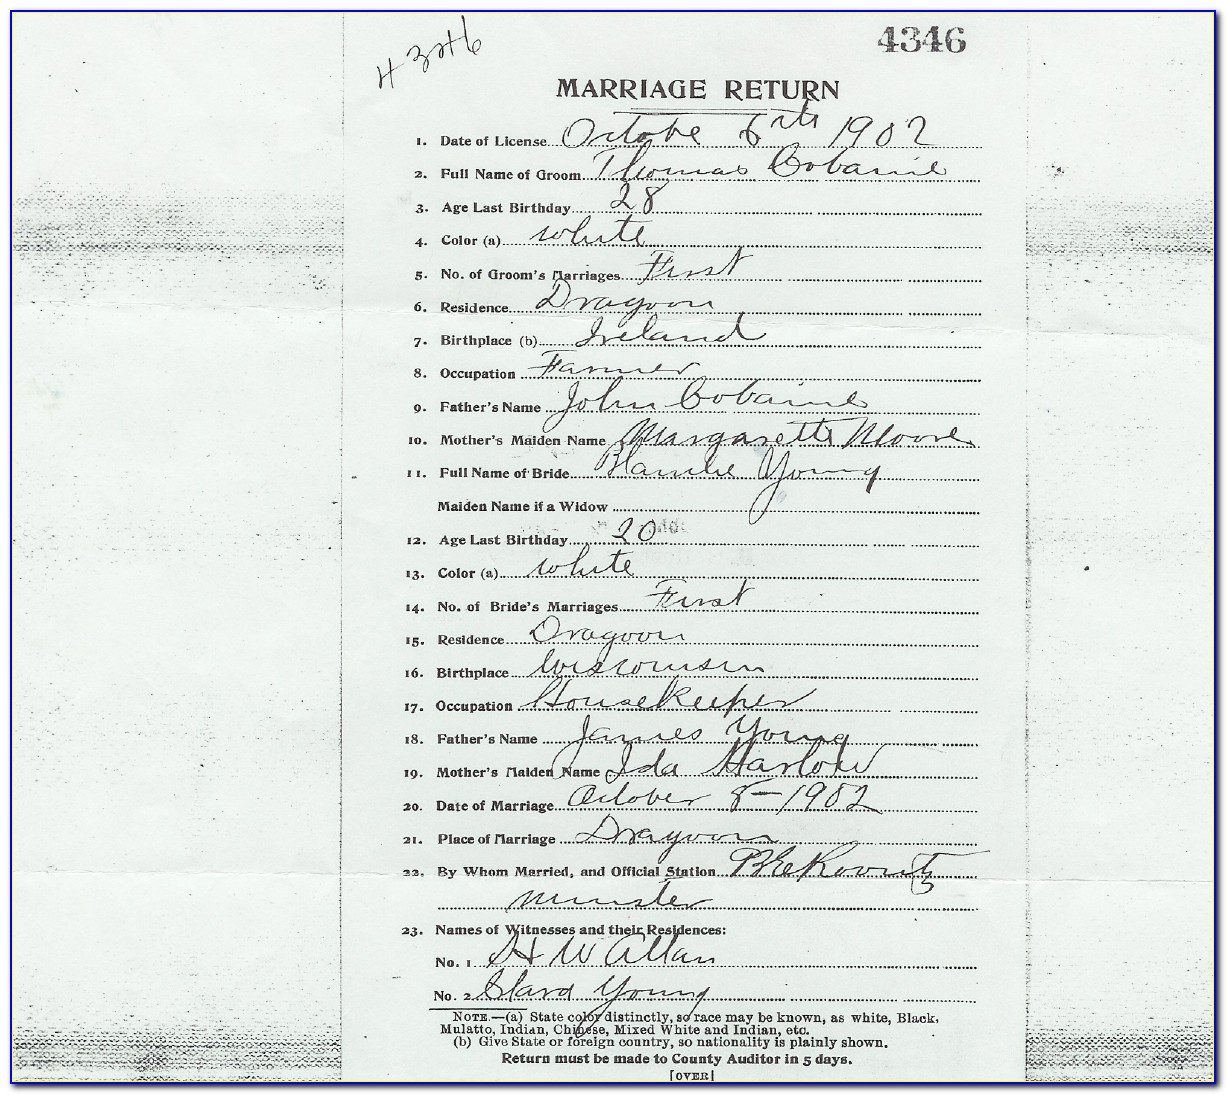 Spokane Birth Certificate Copy